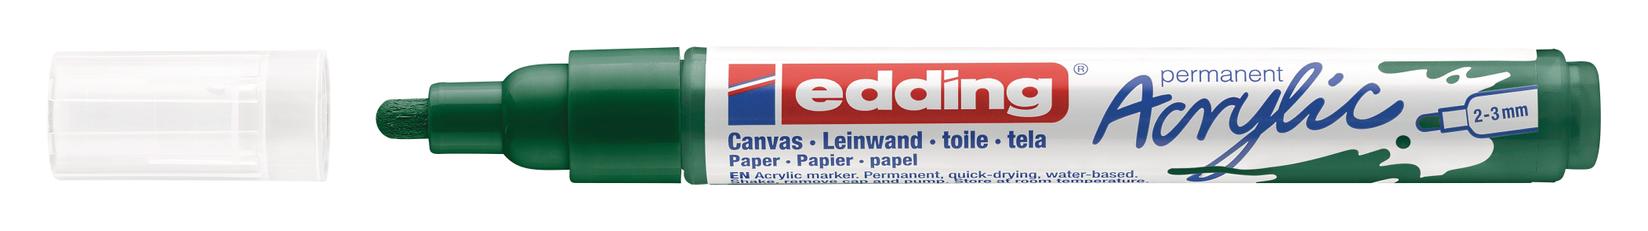 EDDING Akrilni marker medium 2-3mm obli vrh E-5100 zimzeleni